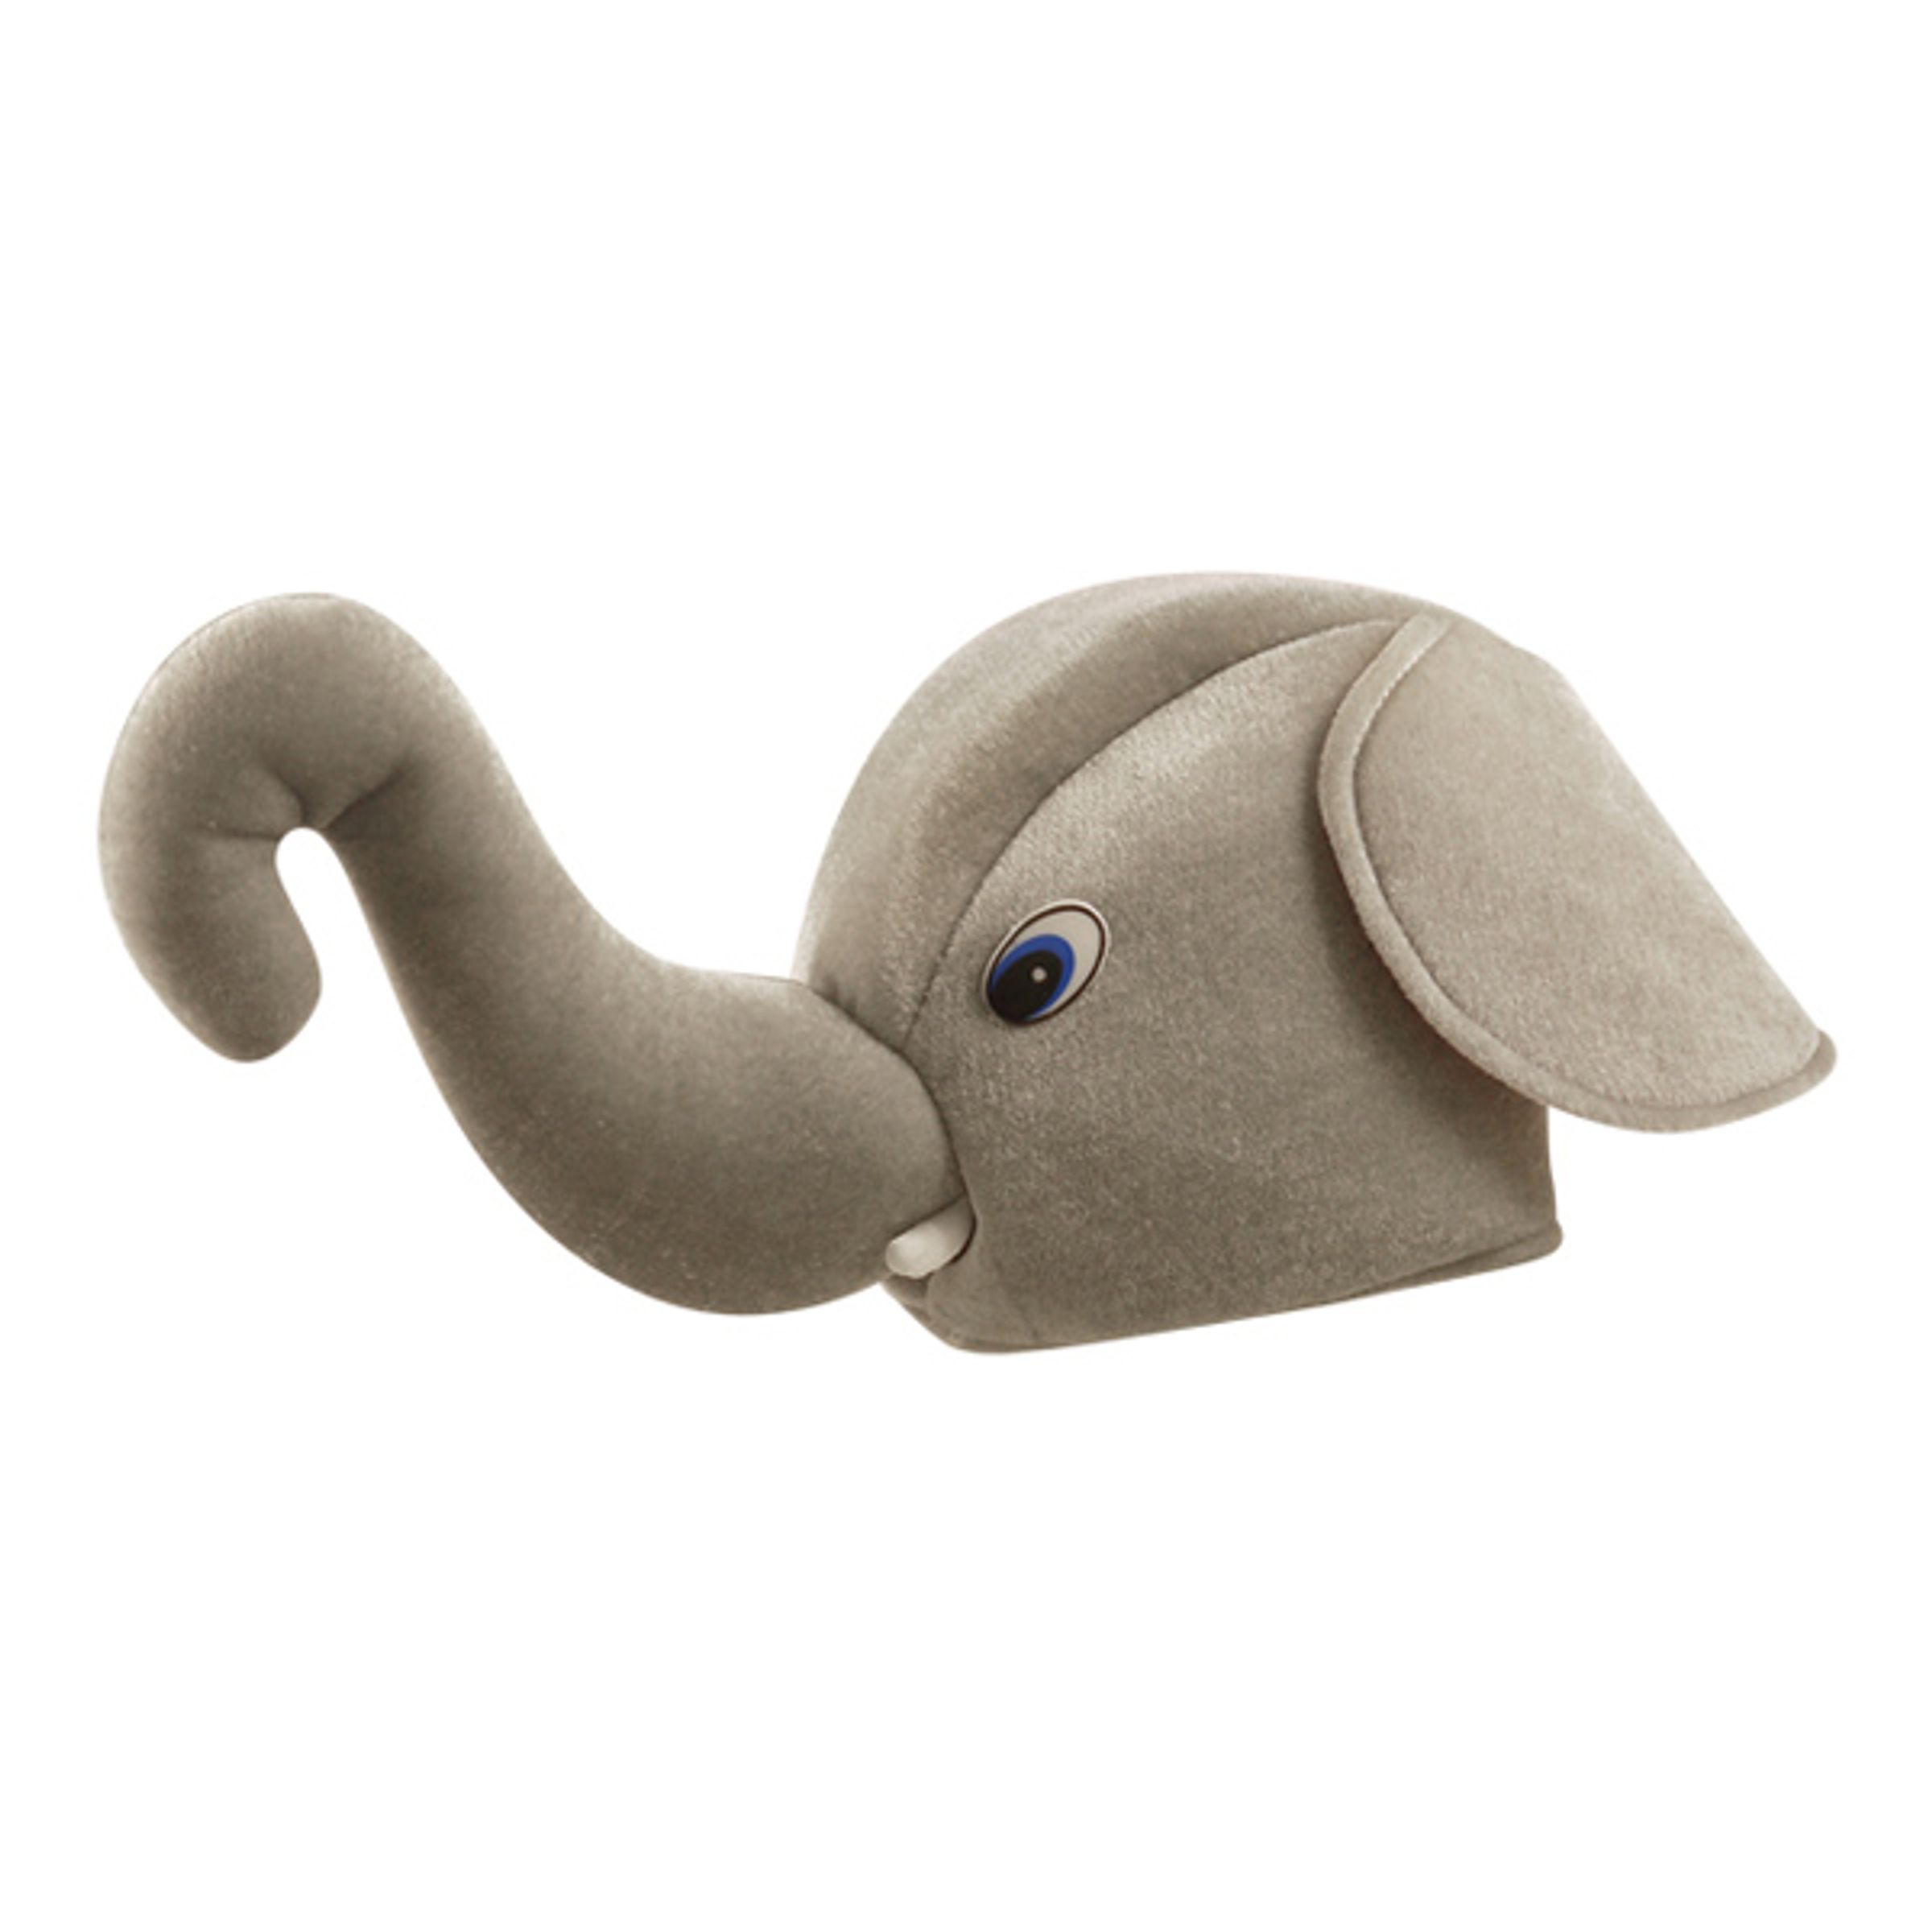 Elefanthatt - One size